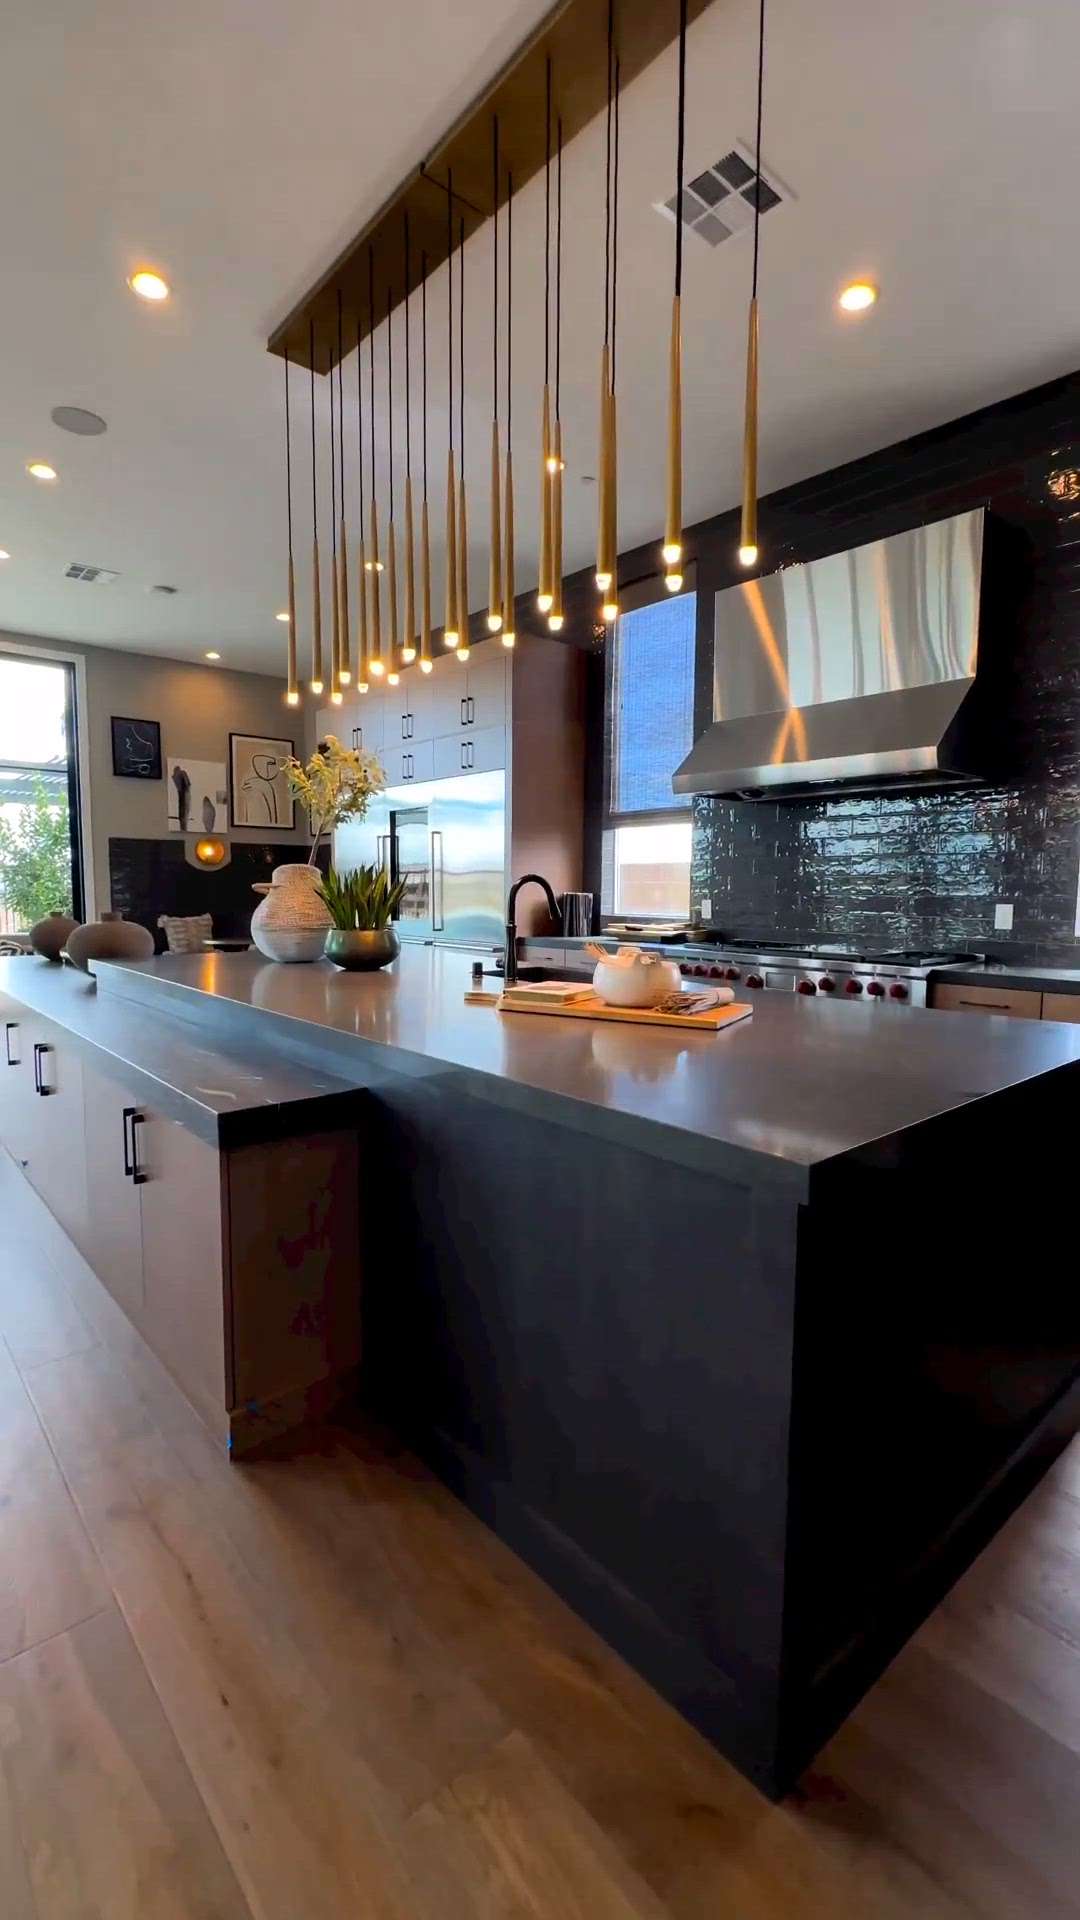 amazing interior design.
call us :- 9926272628 #HouseDesigns  #40LakhHouse #InteriorDesigner #Architect